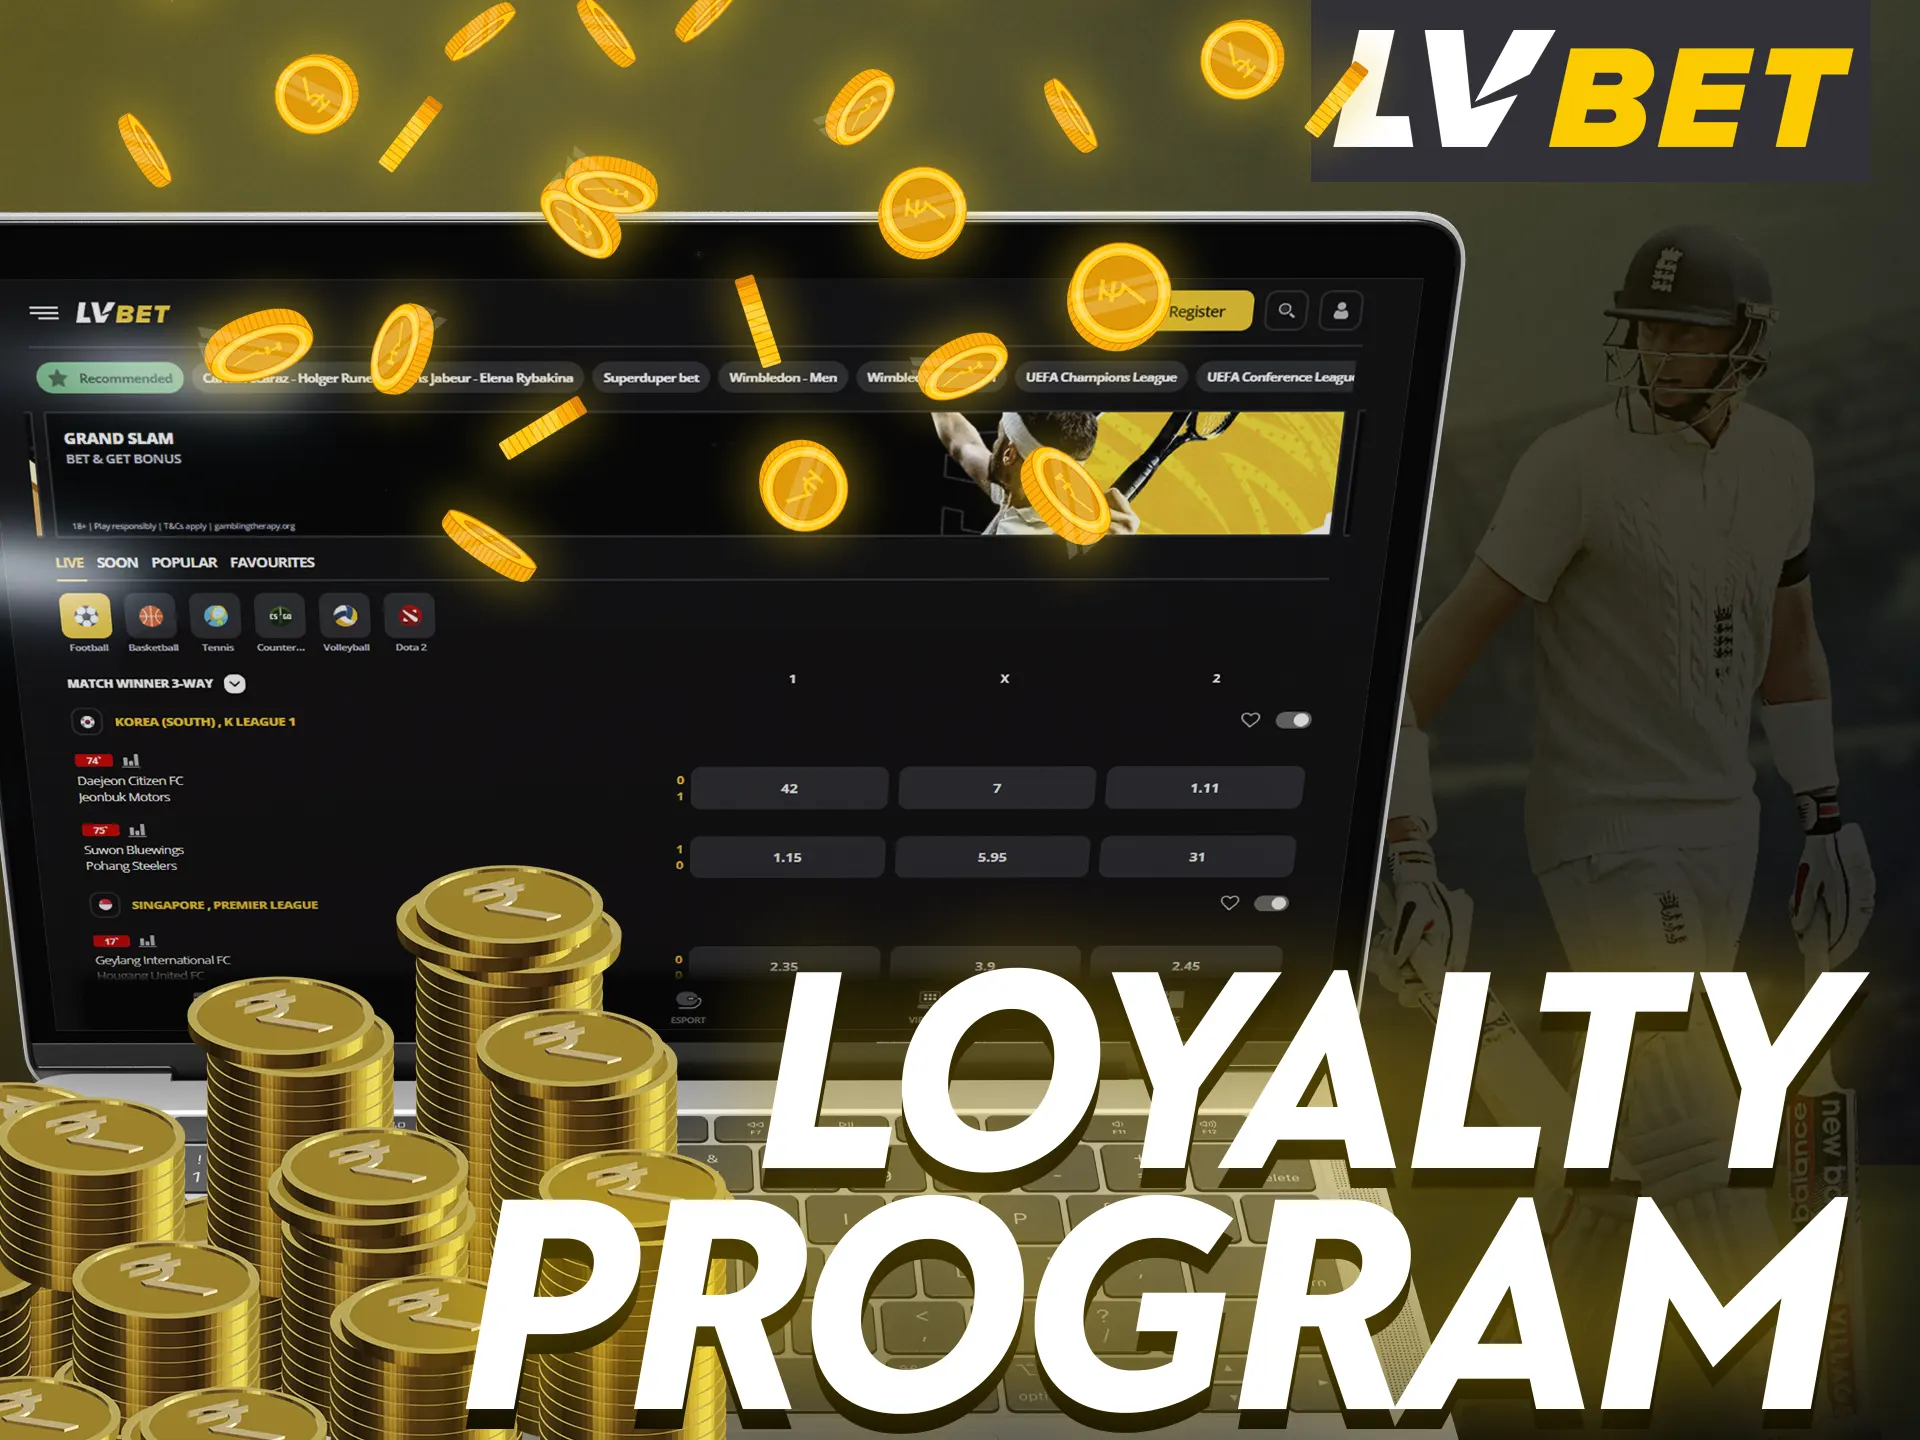 Take part in the LV Bet loyalty program.